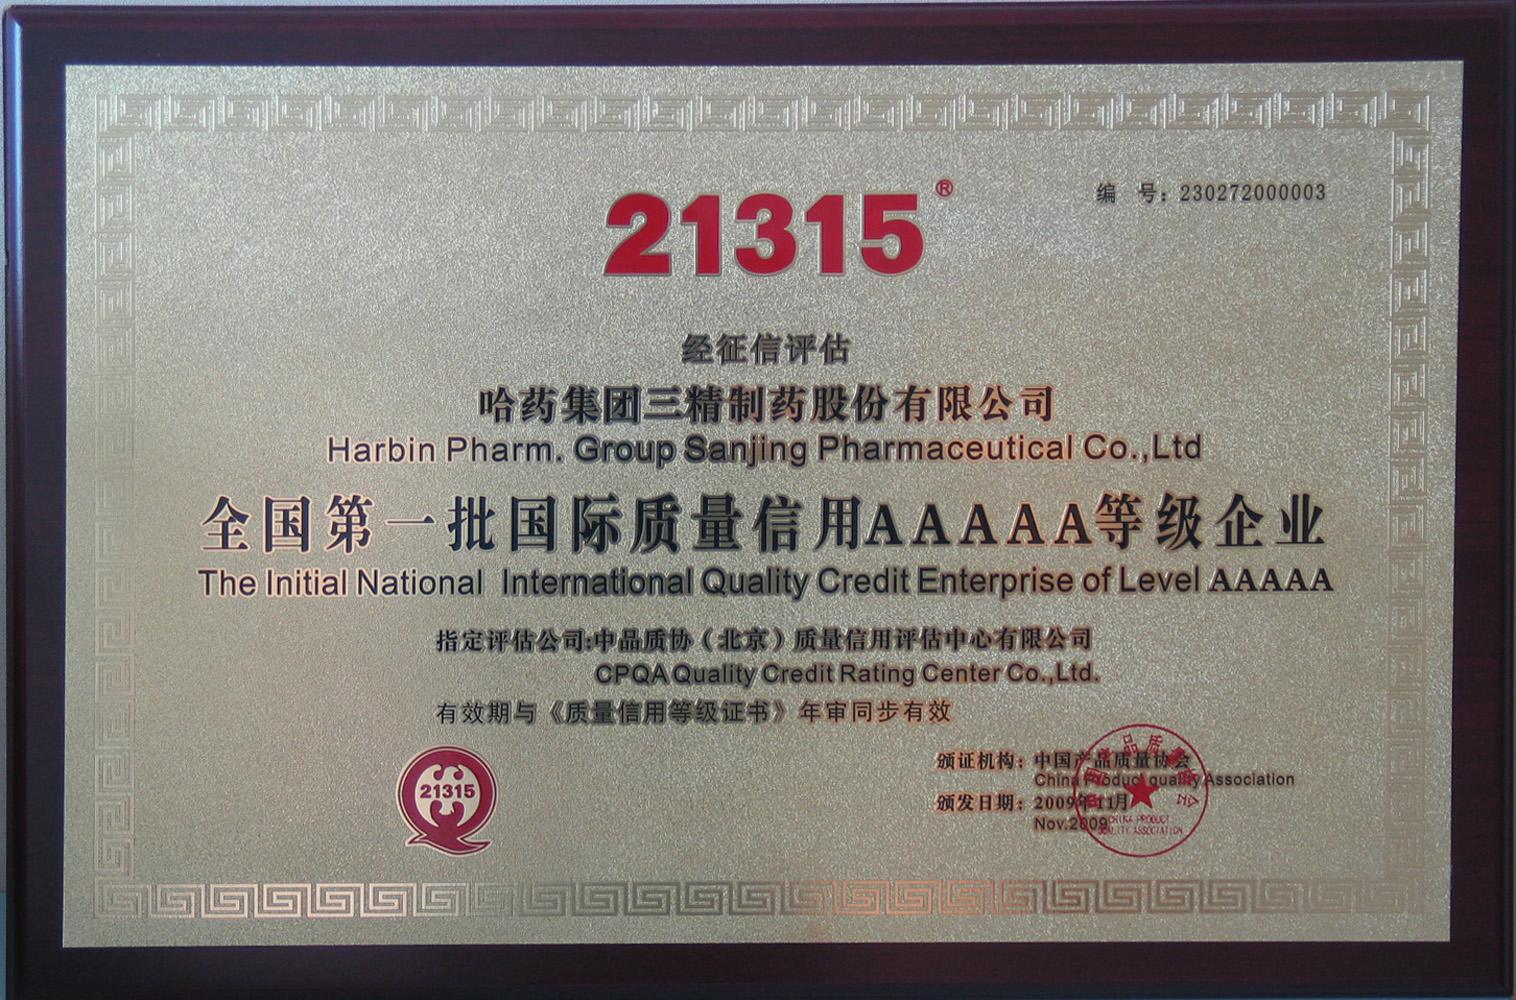 Good news: SAN JING Pharmaceutical was award enterprise of level AAAAA